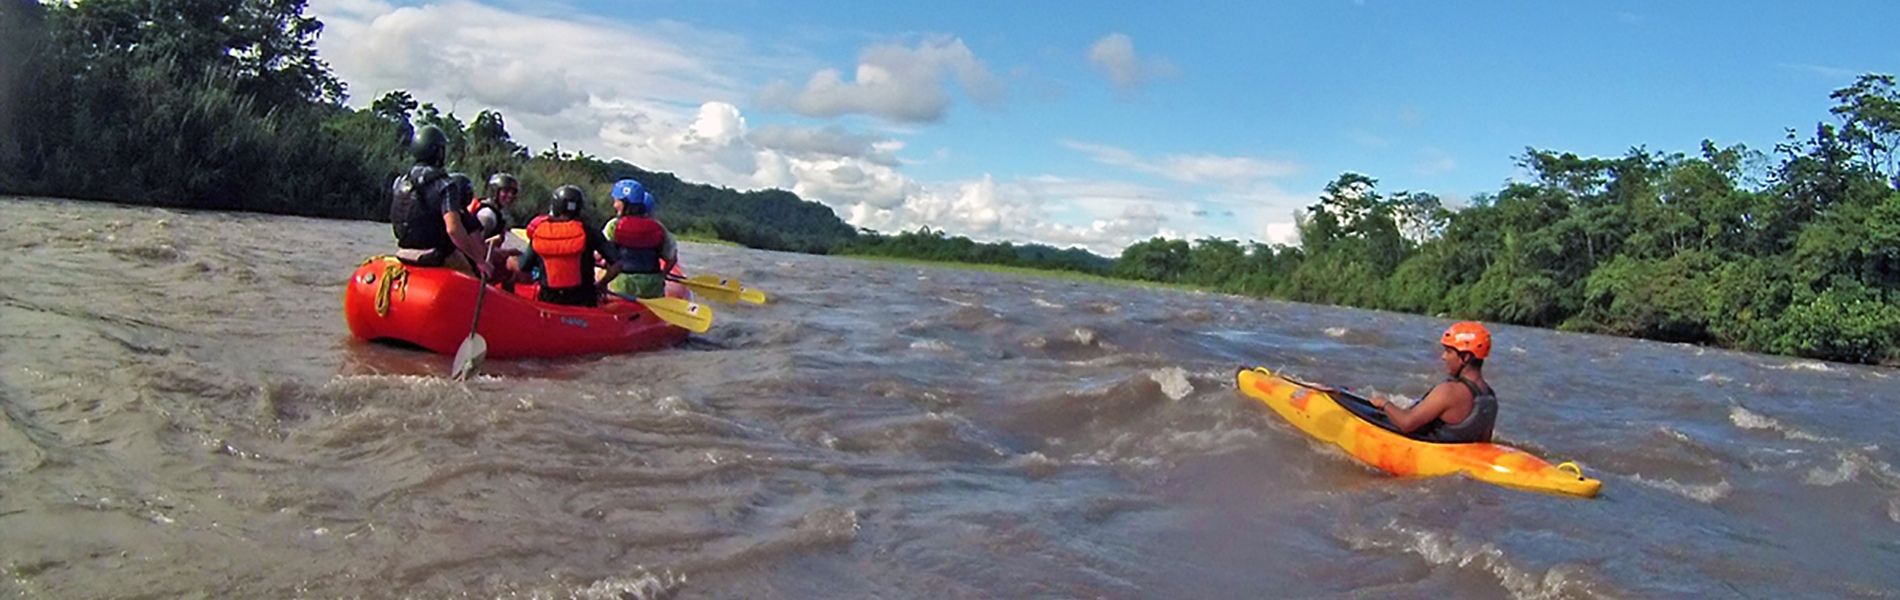 Rafting Jatunyacu River